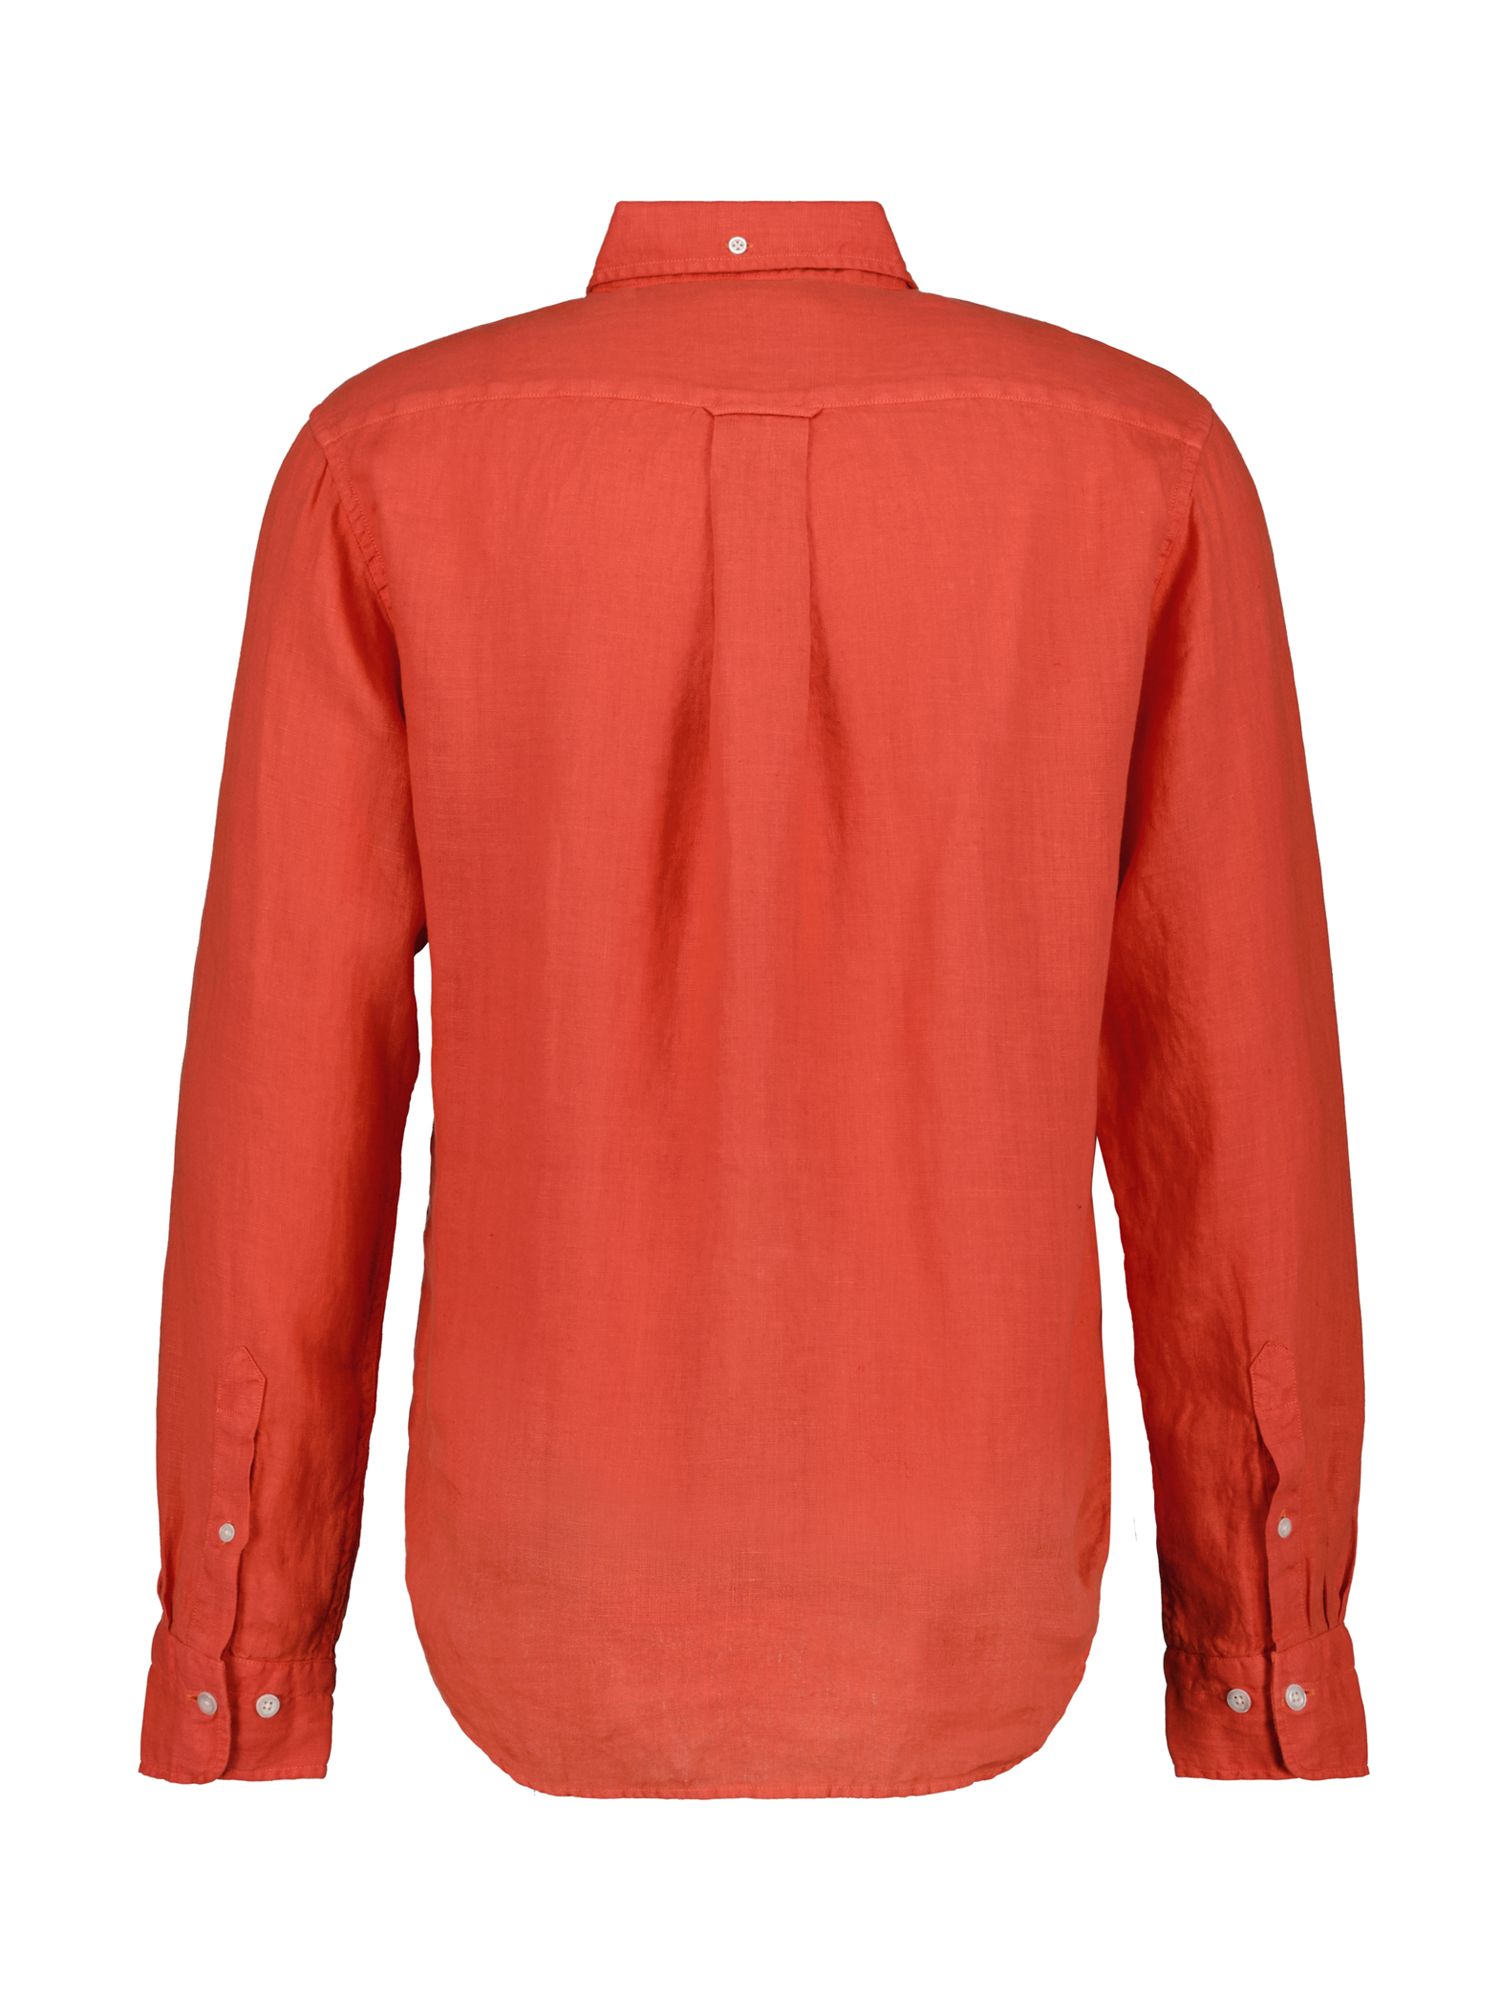 GANT Regular Fit Dyed Linen Shirt, Orange, XL